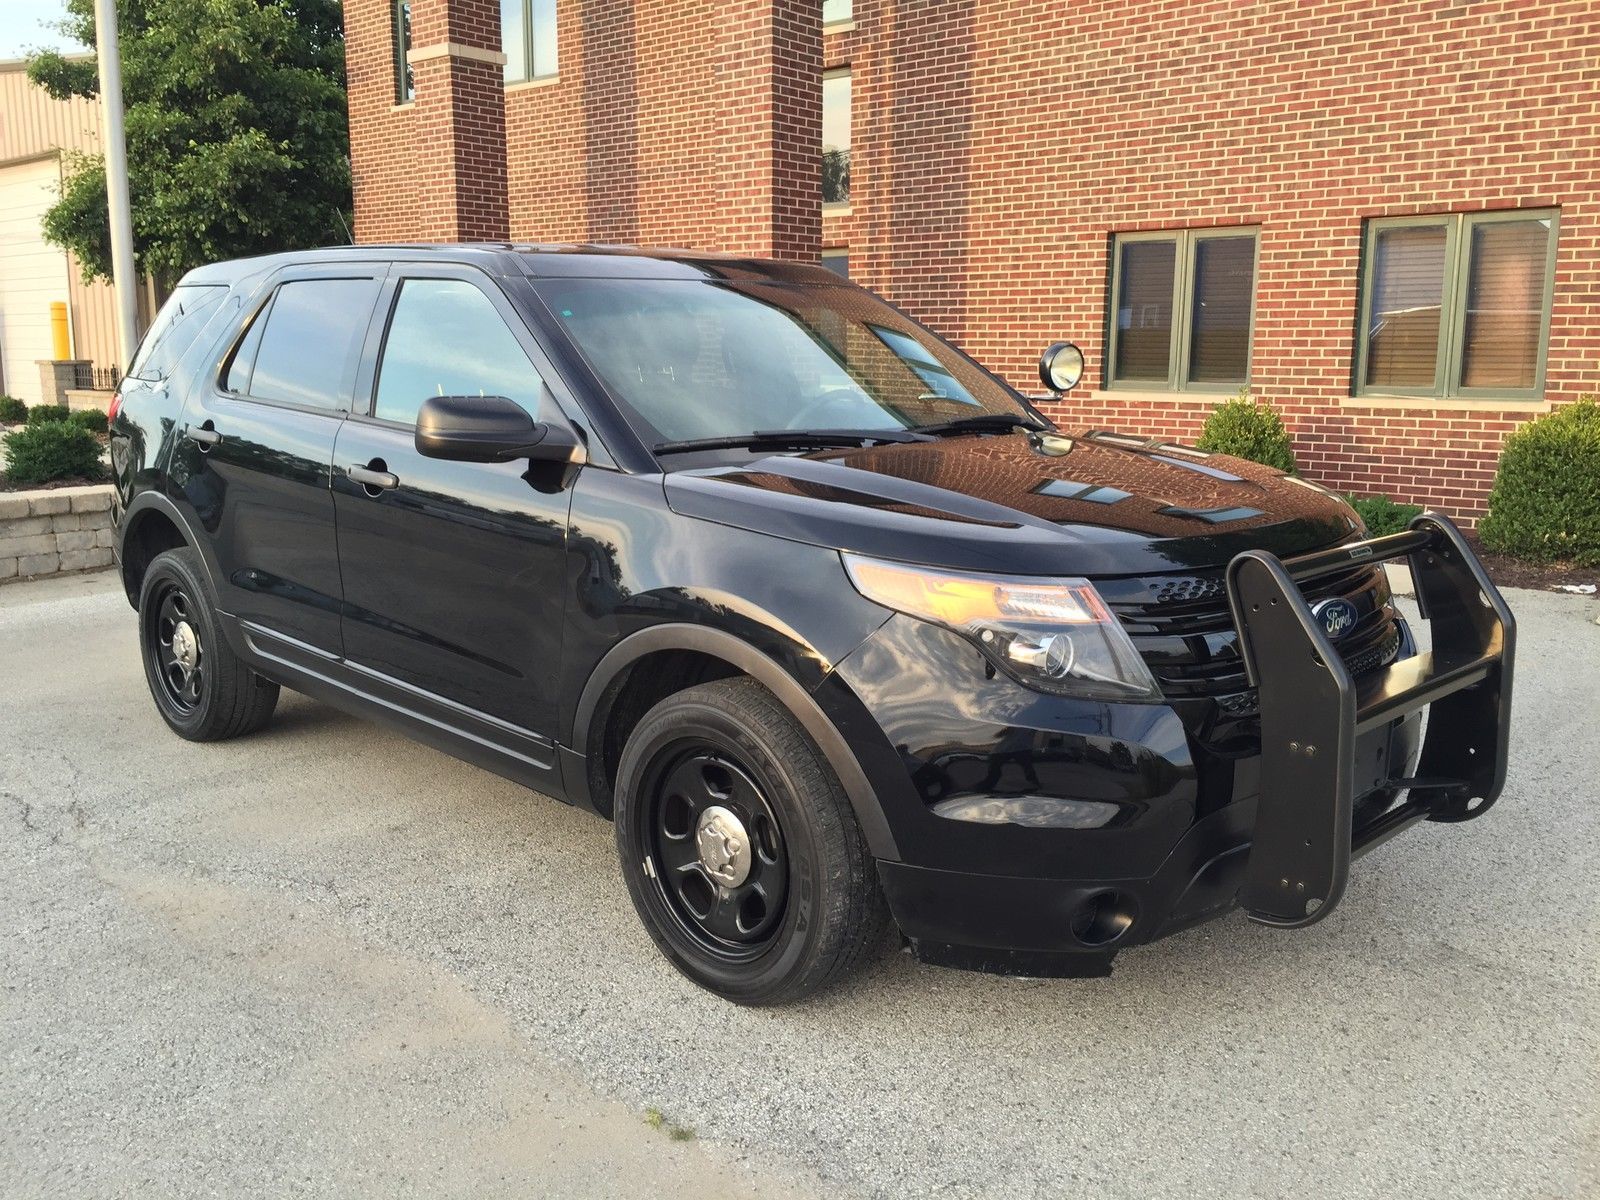 2014 Ford Explorer Police Interceptor 3.7L AWD | Ford explorer, 2014 ford  explorer, Ford police